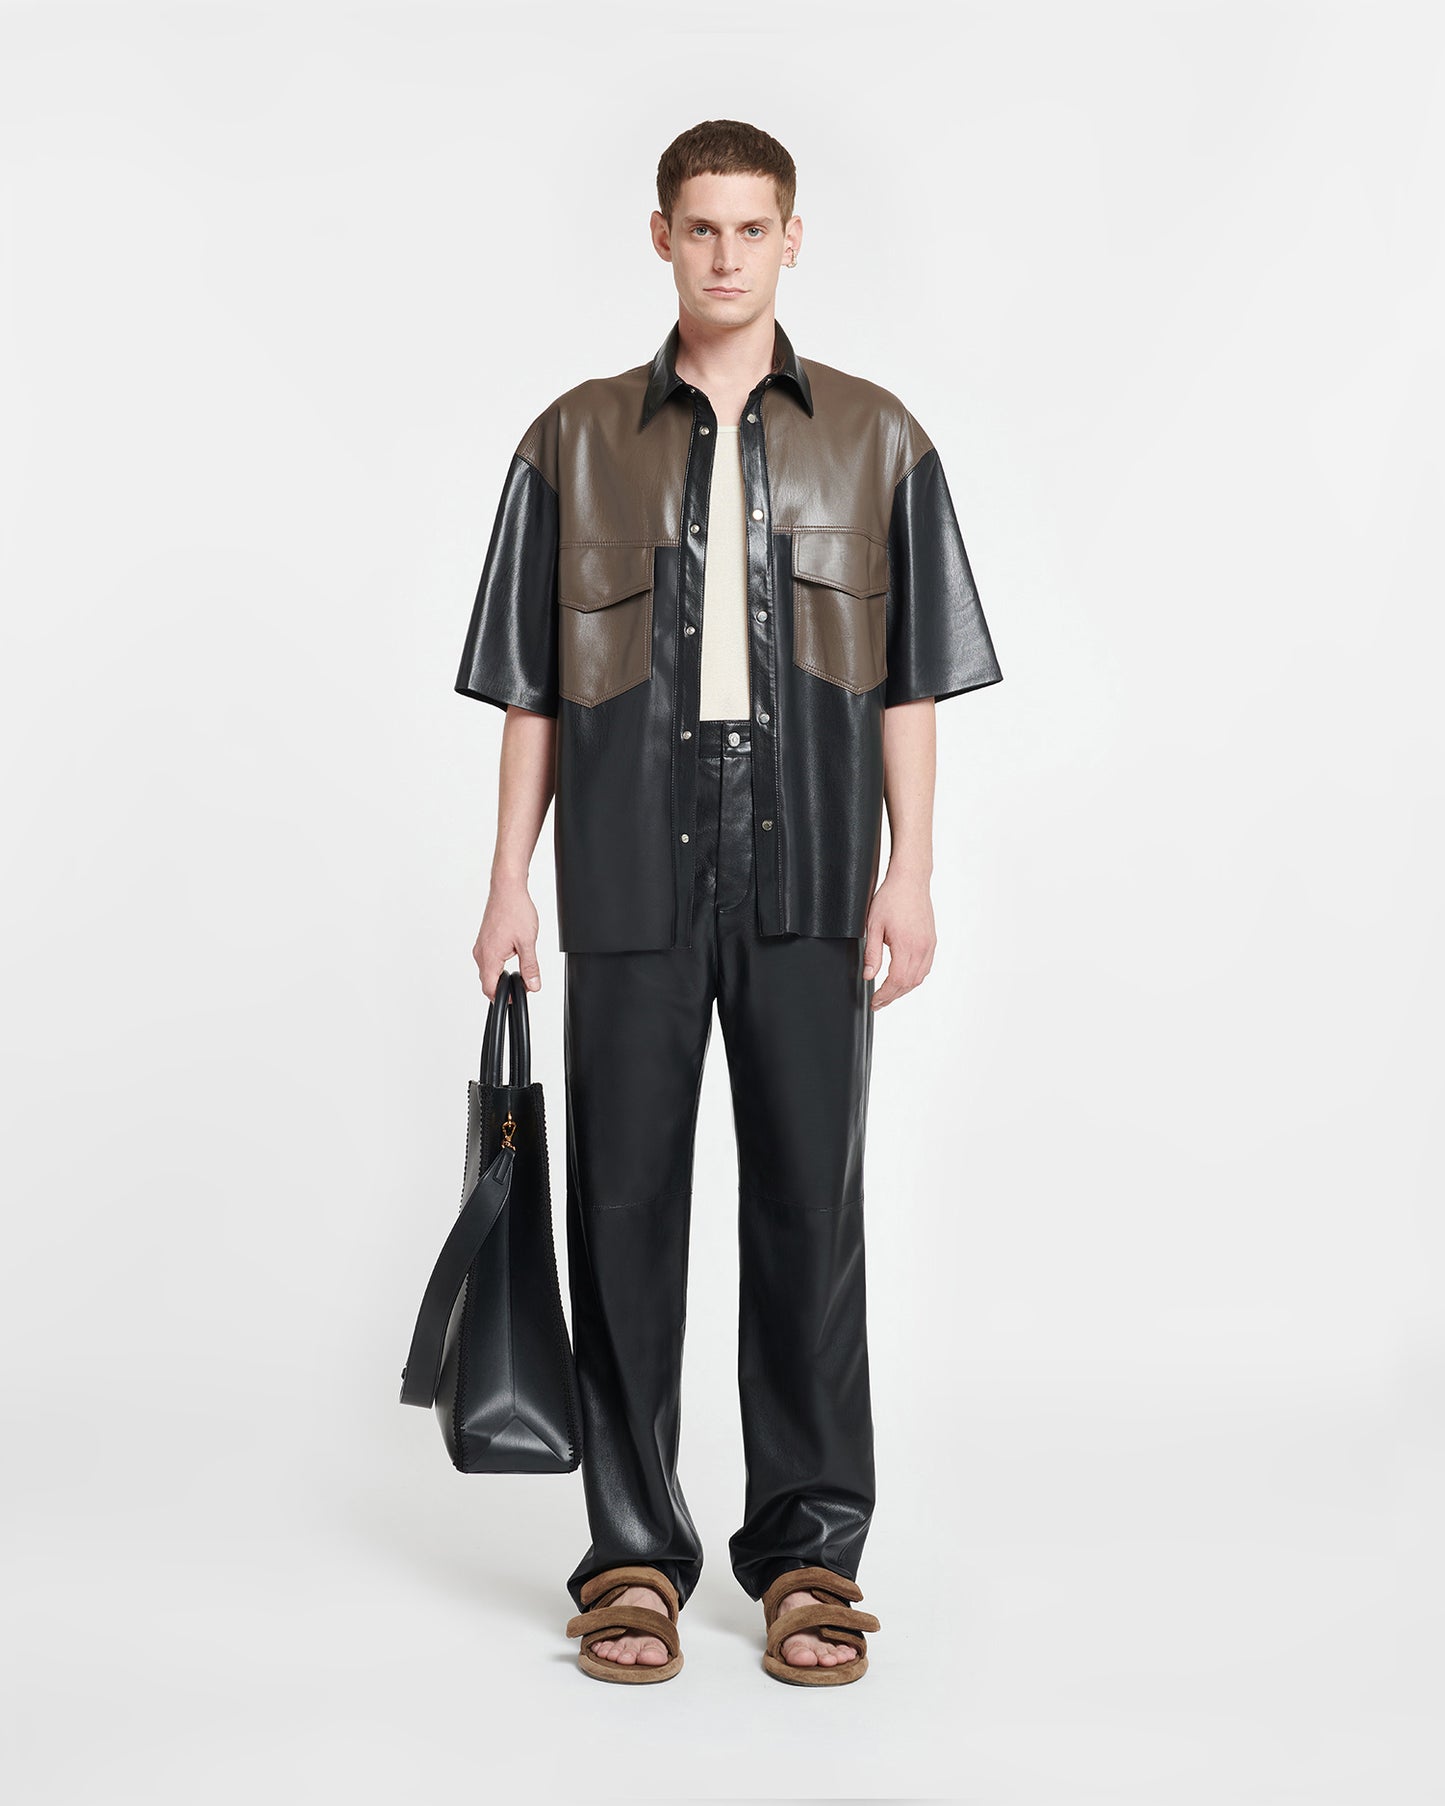 Mance - Okobor™ Alt-Leather Shirt - Shiitake/Black